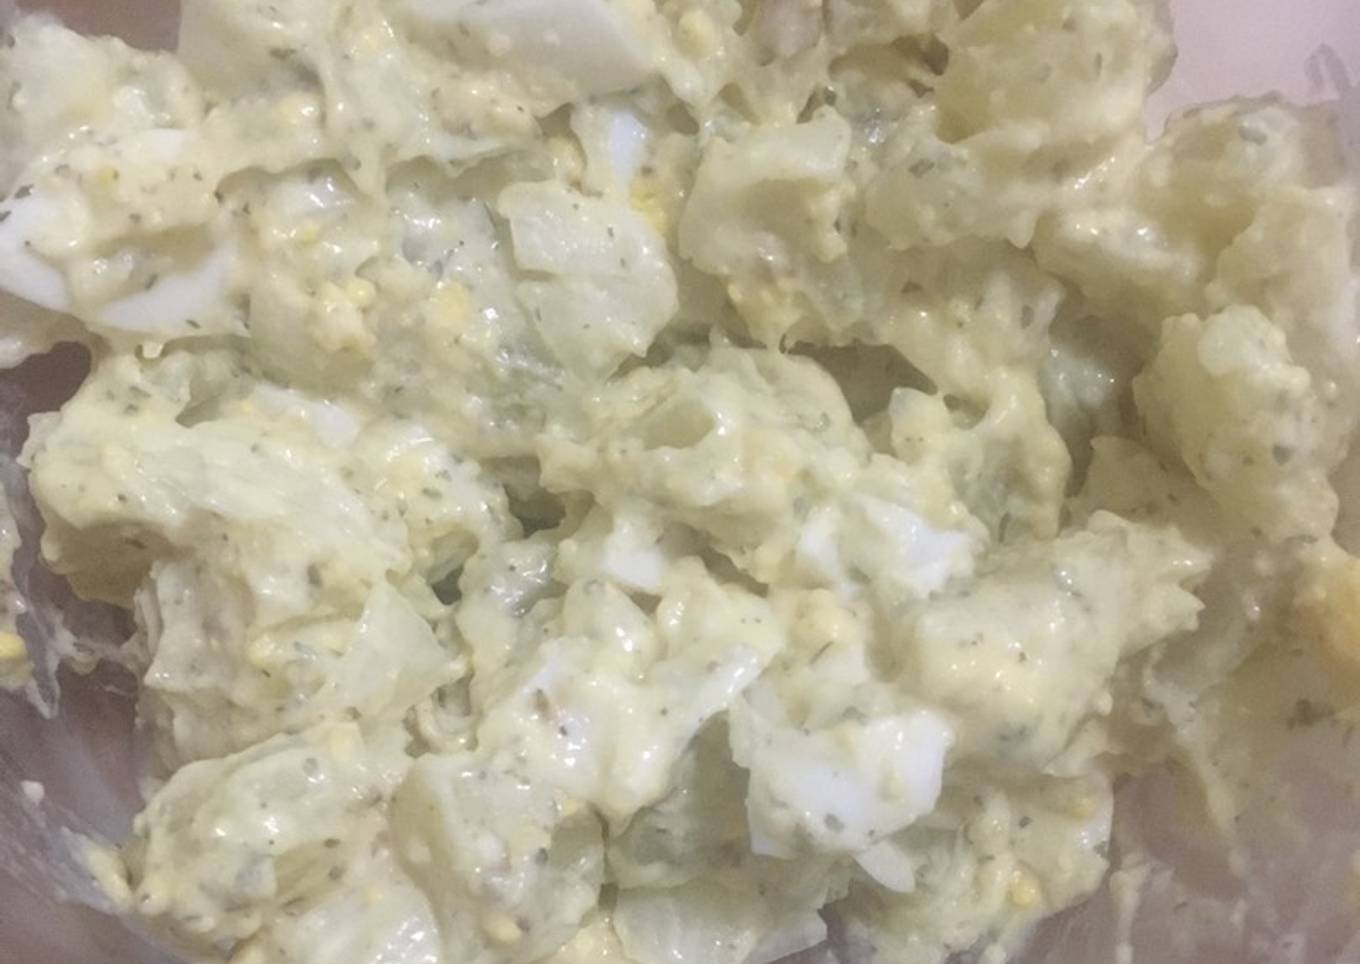 Simple potato salad